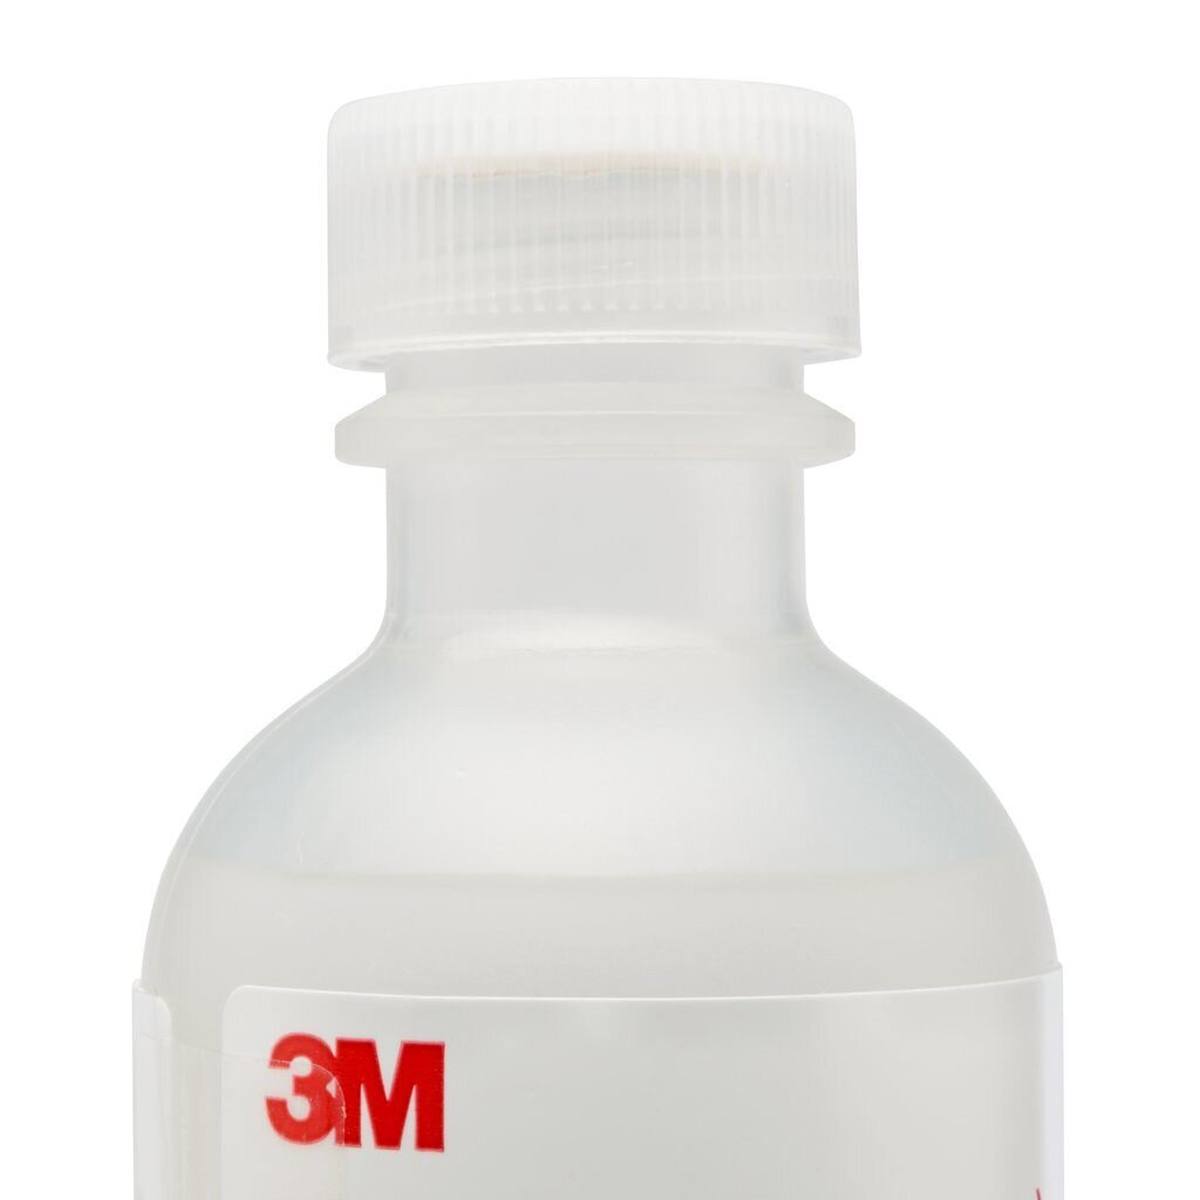 3M FT-31 Fit Test Sensitivity Solution, 55ml bottles, bitter (pack=6 pieces)